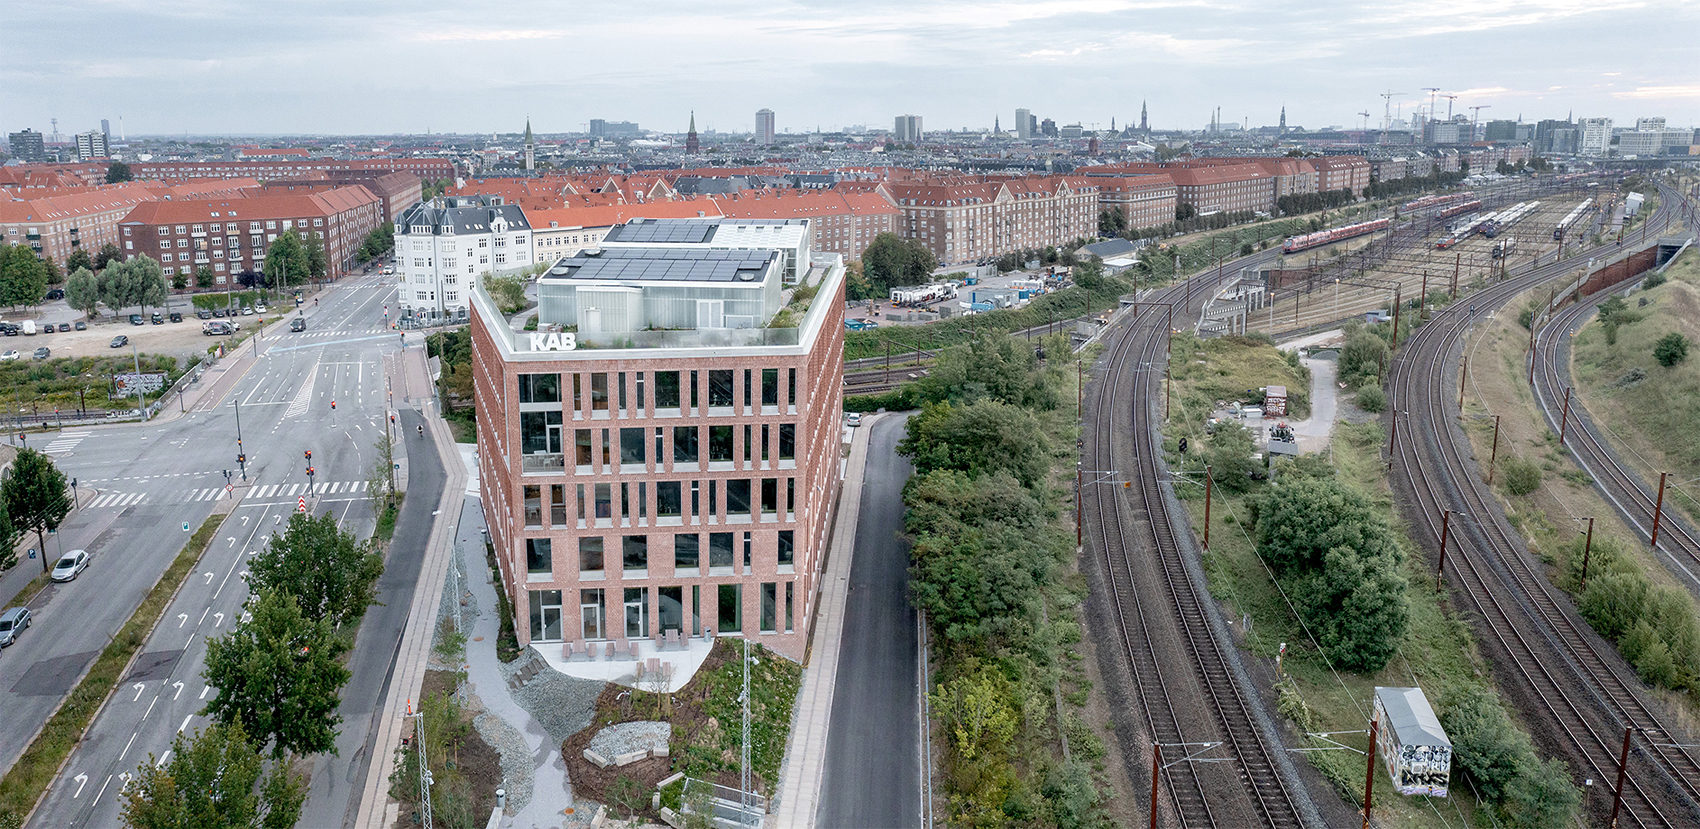 KAB住房协会总部，哥本哈根/家一般的办公场所-7